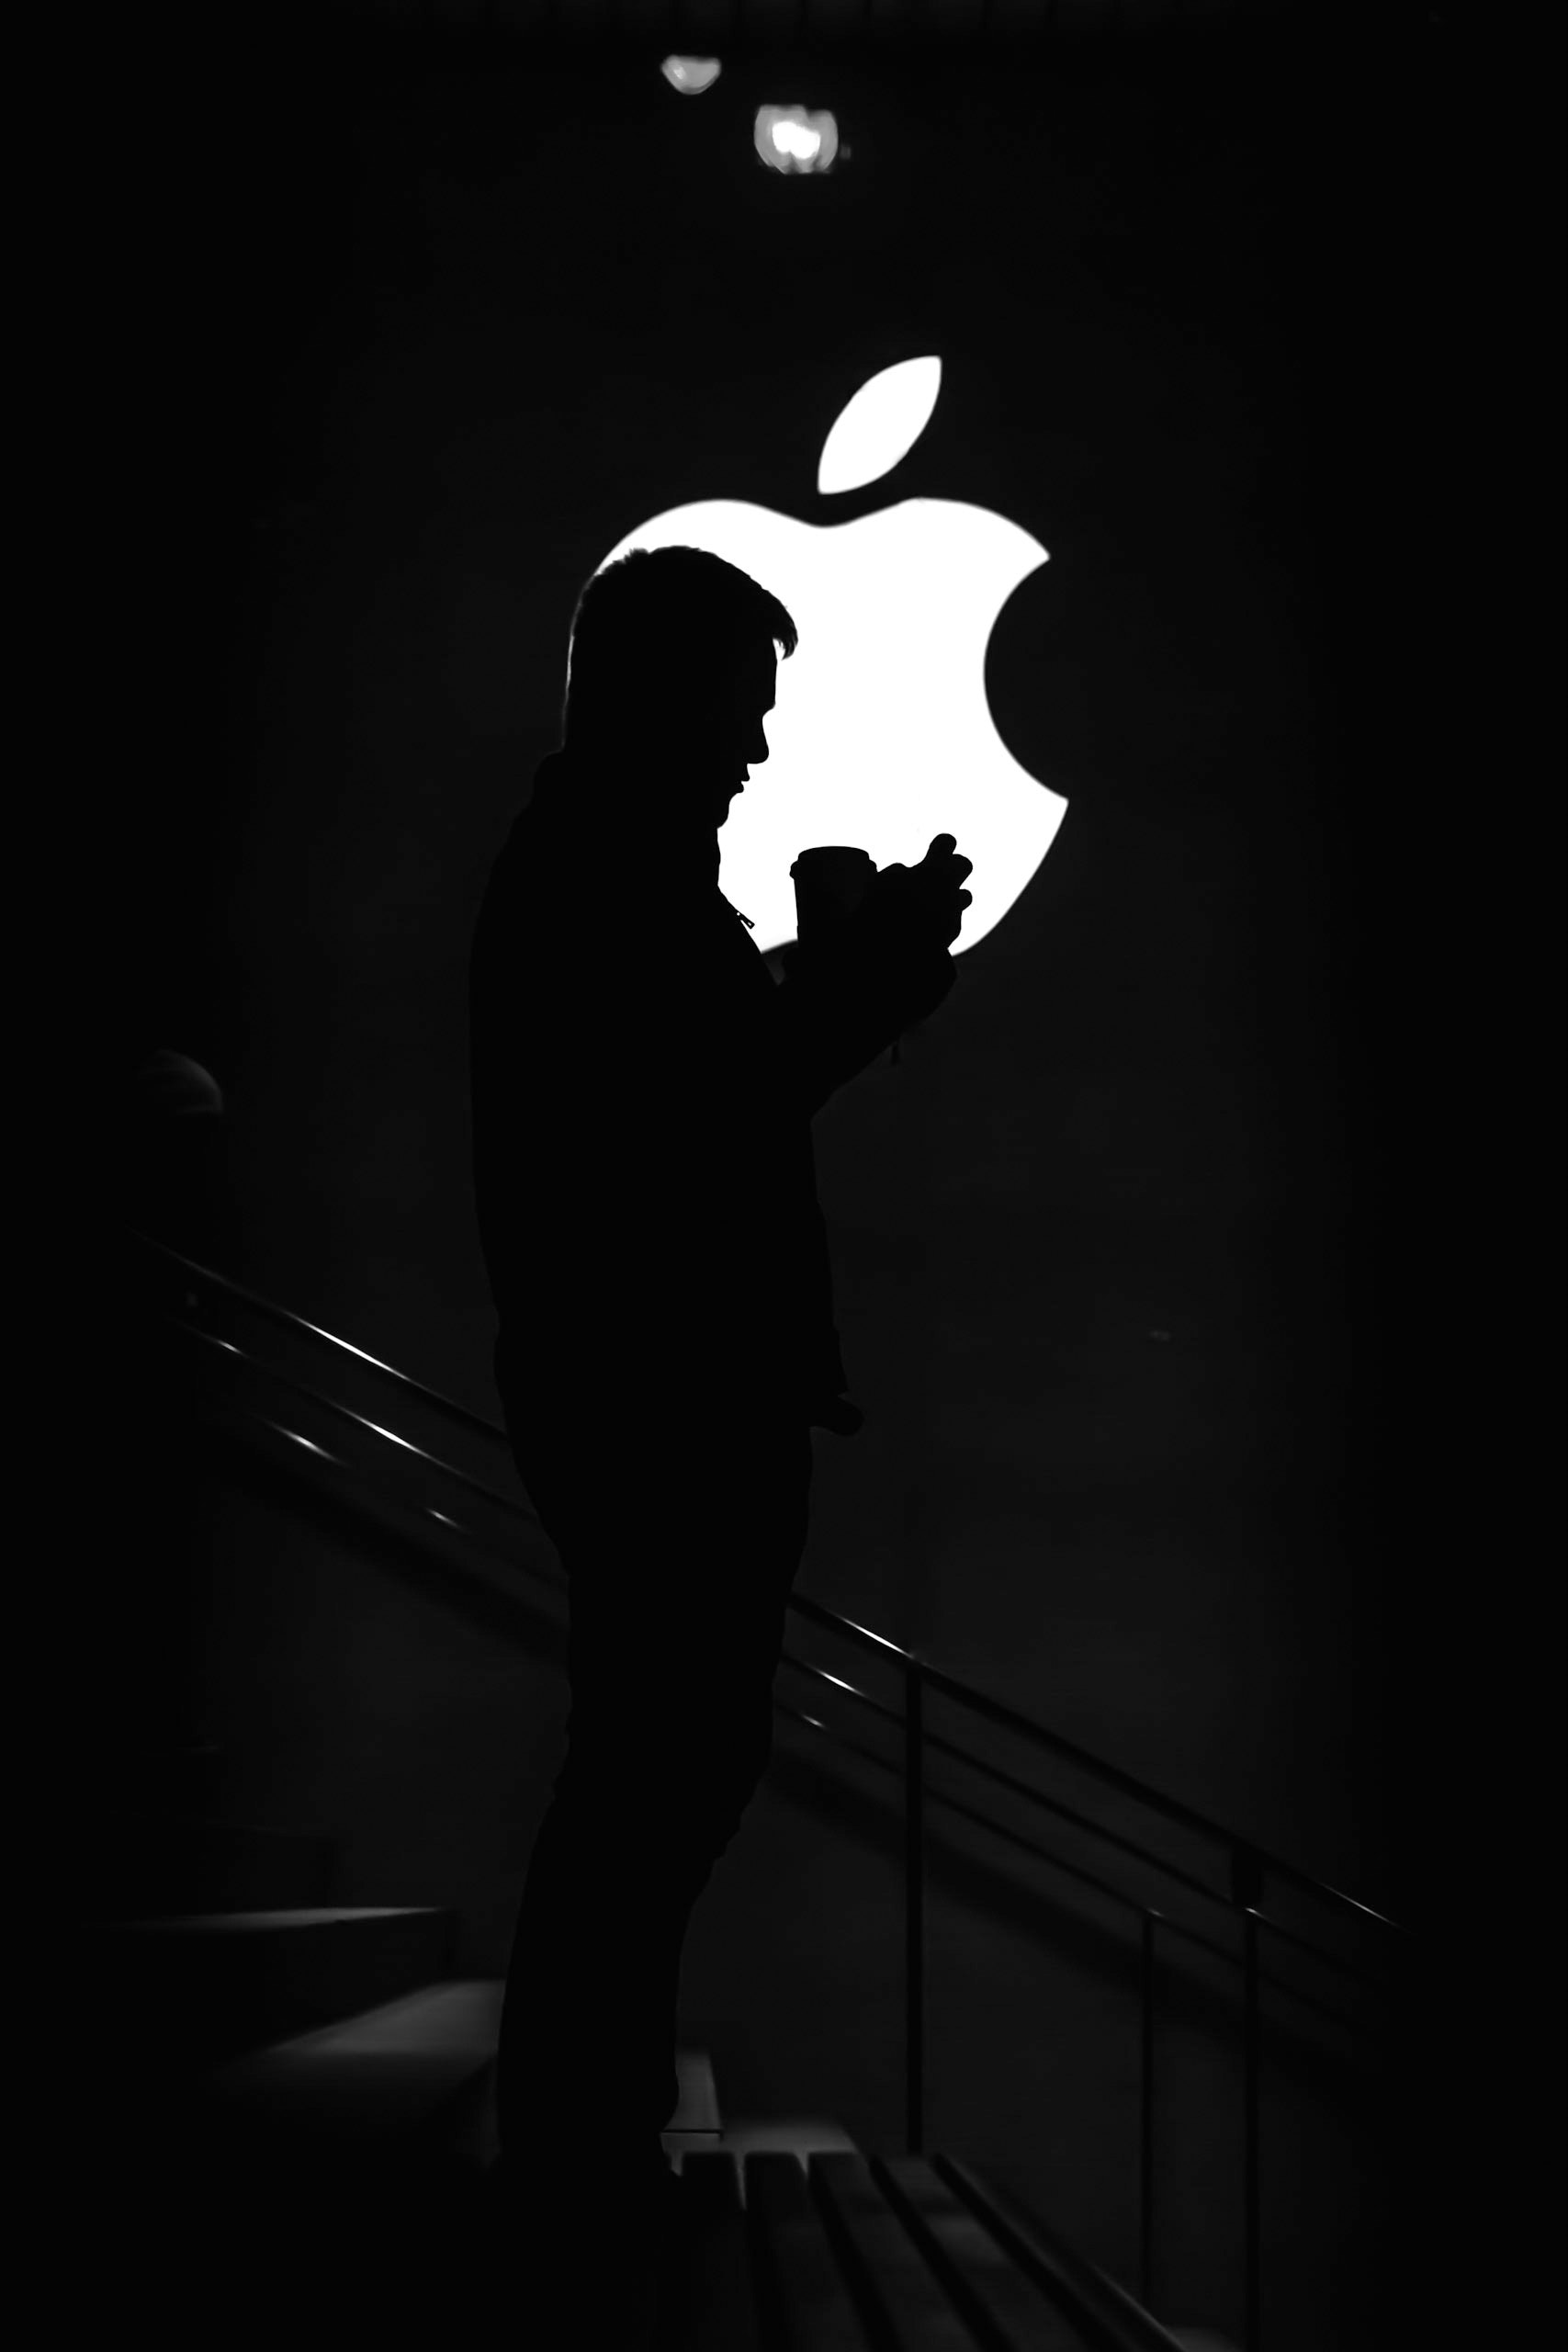 Apple Logo Design